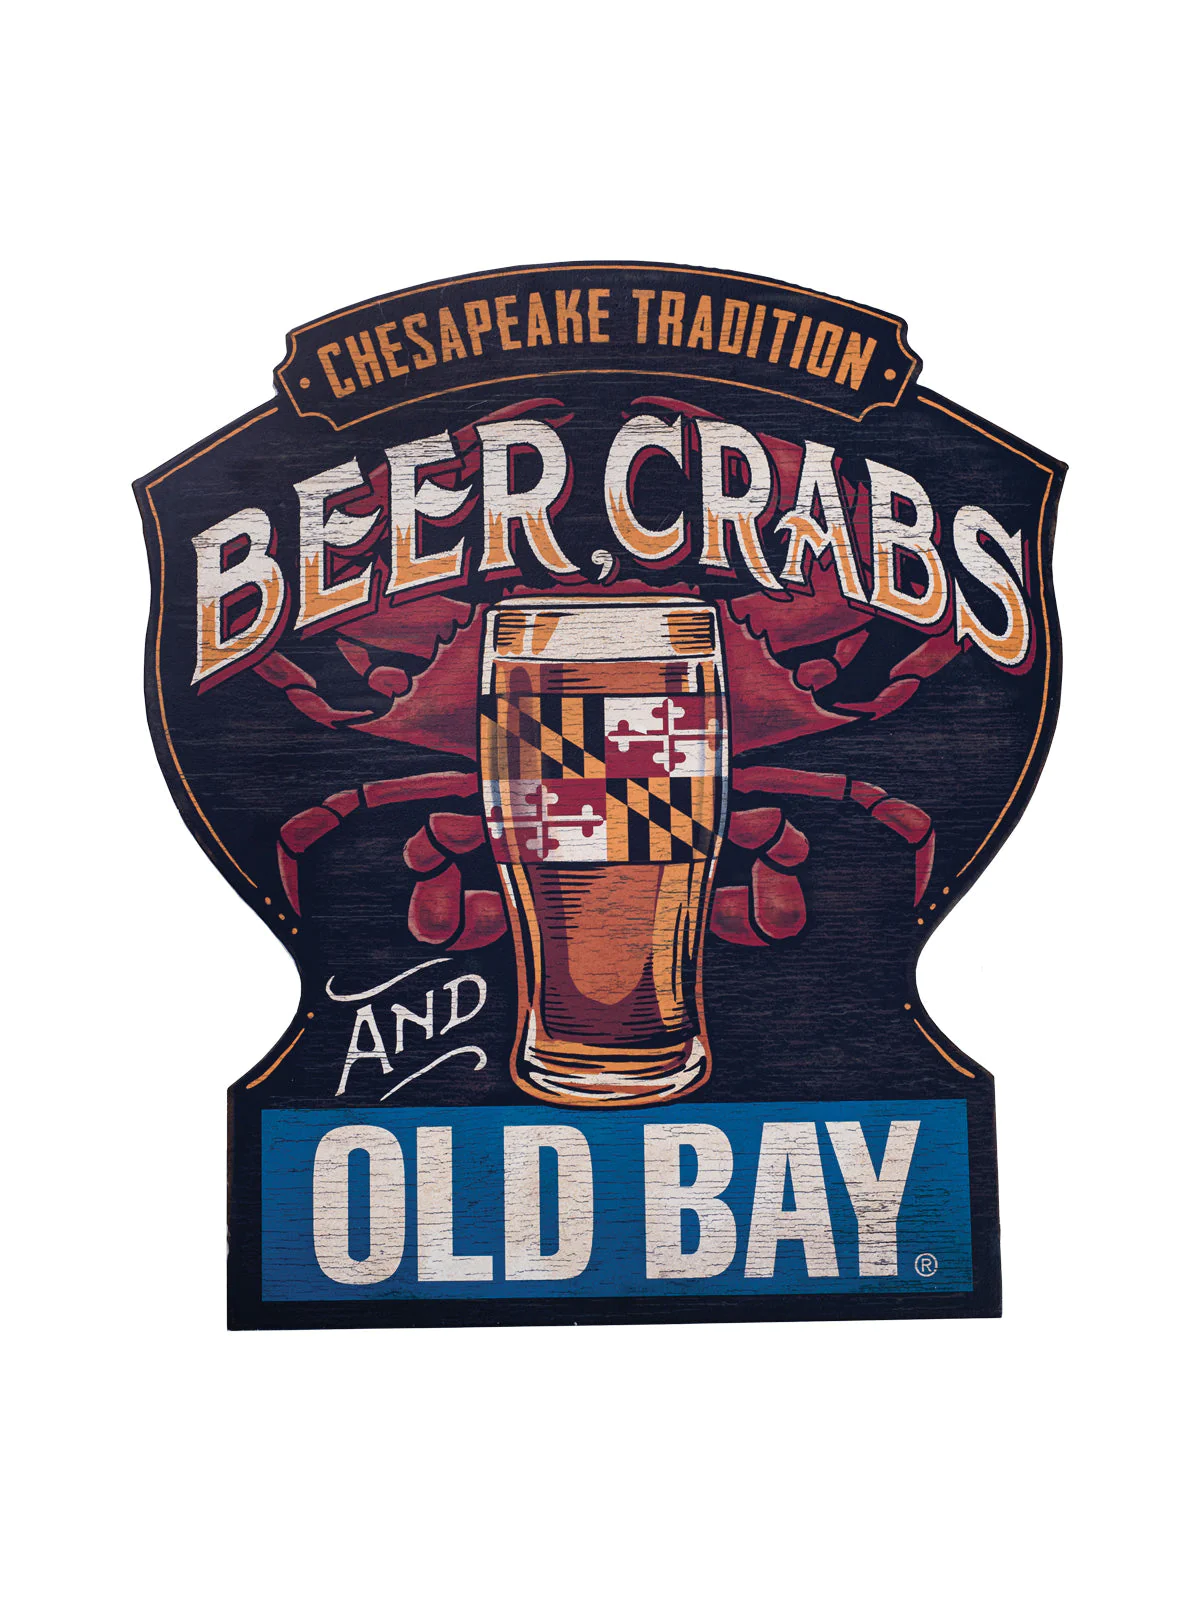 old-bay-beer-crabs-sign